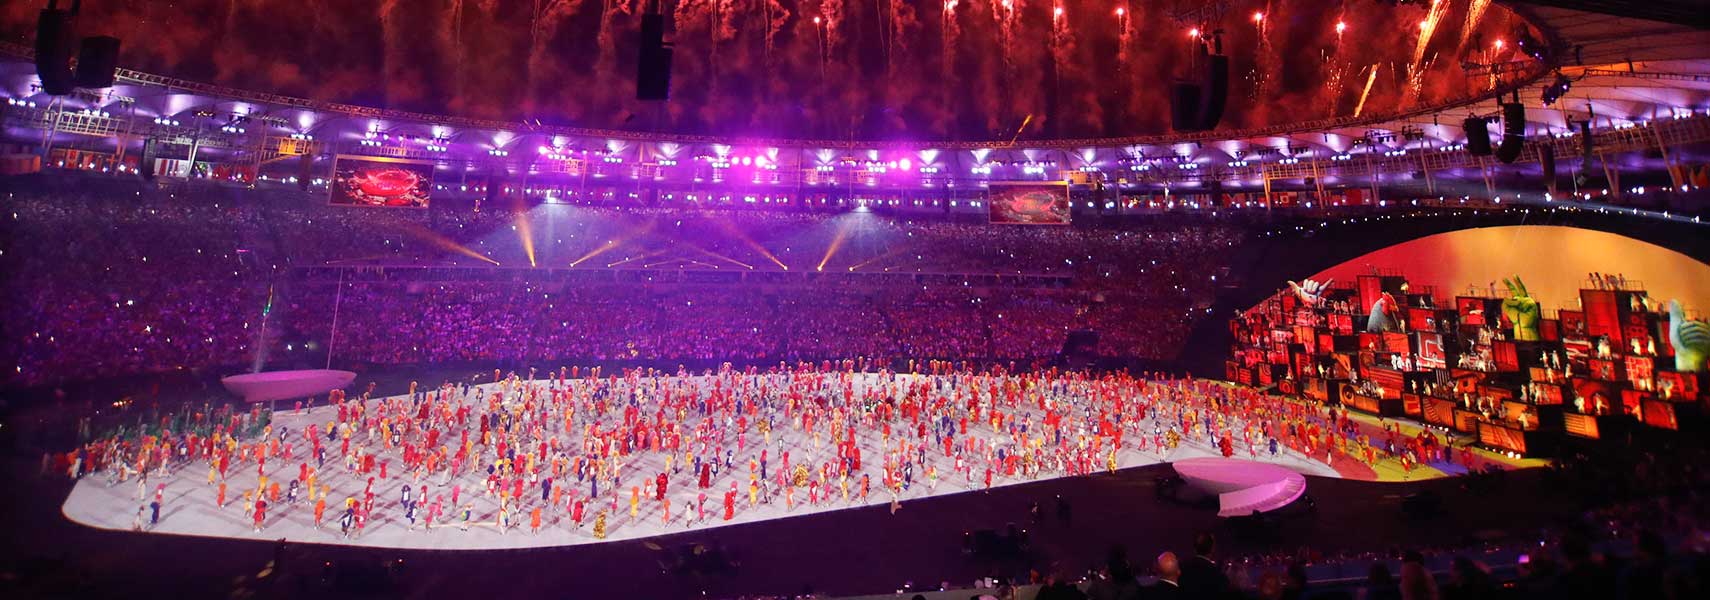 2016 Summer Olympics opening ceremony Rio de Janeiro, Brazil